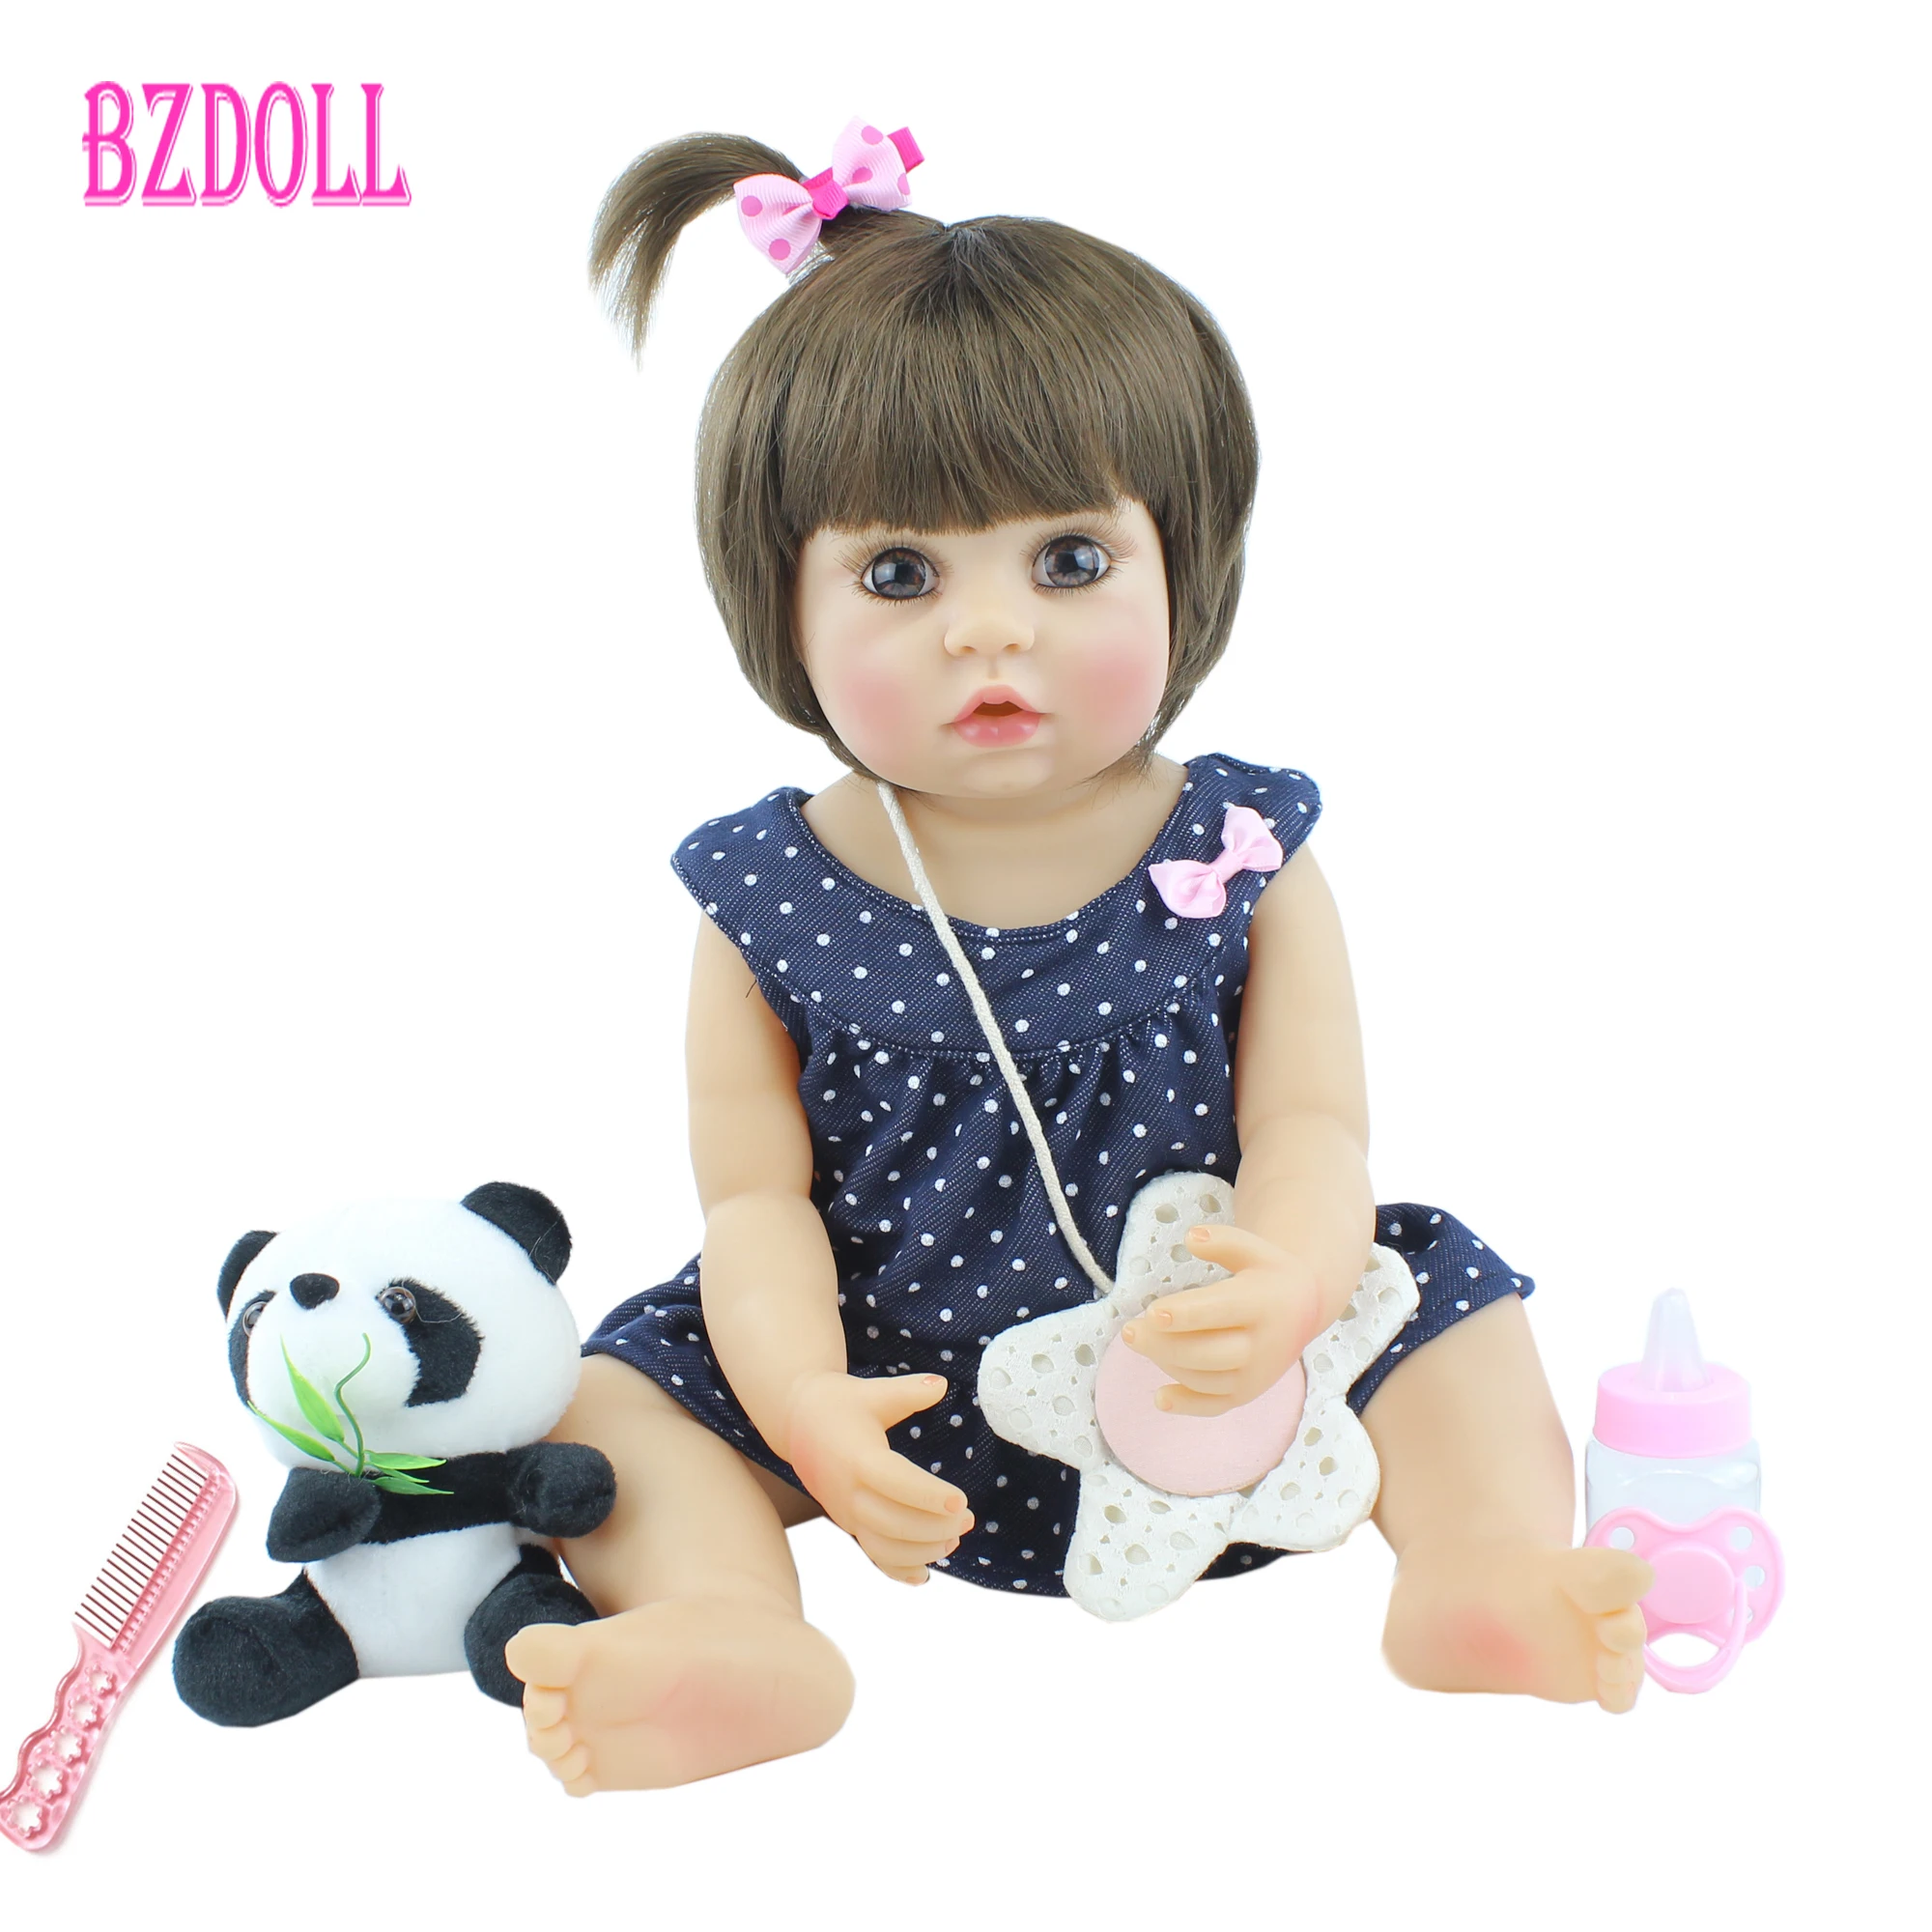 

55cm Full Soft Silicone Reborn Doll Lifelike Newborn Princess Toddler Alive Babies Child Bebe Boneca Dress Up Toy